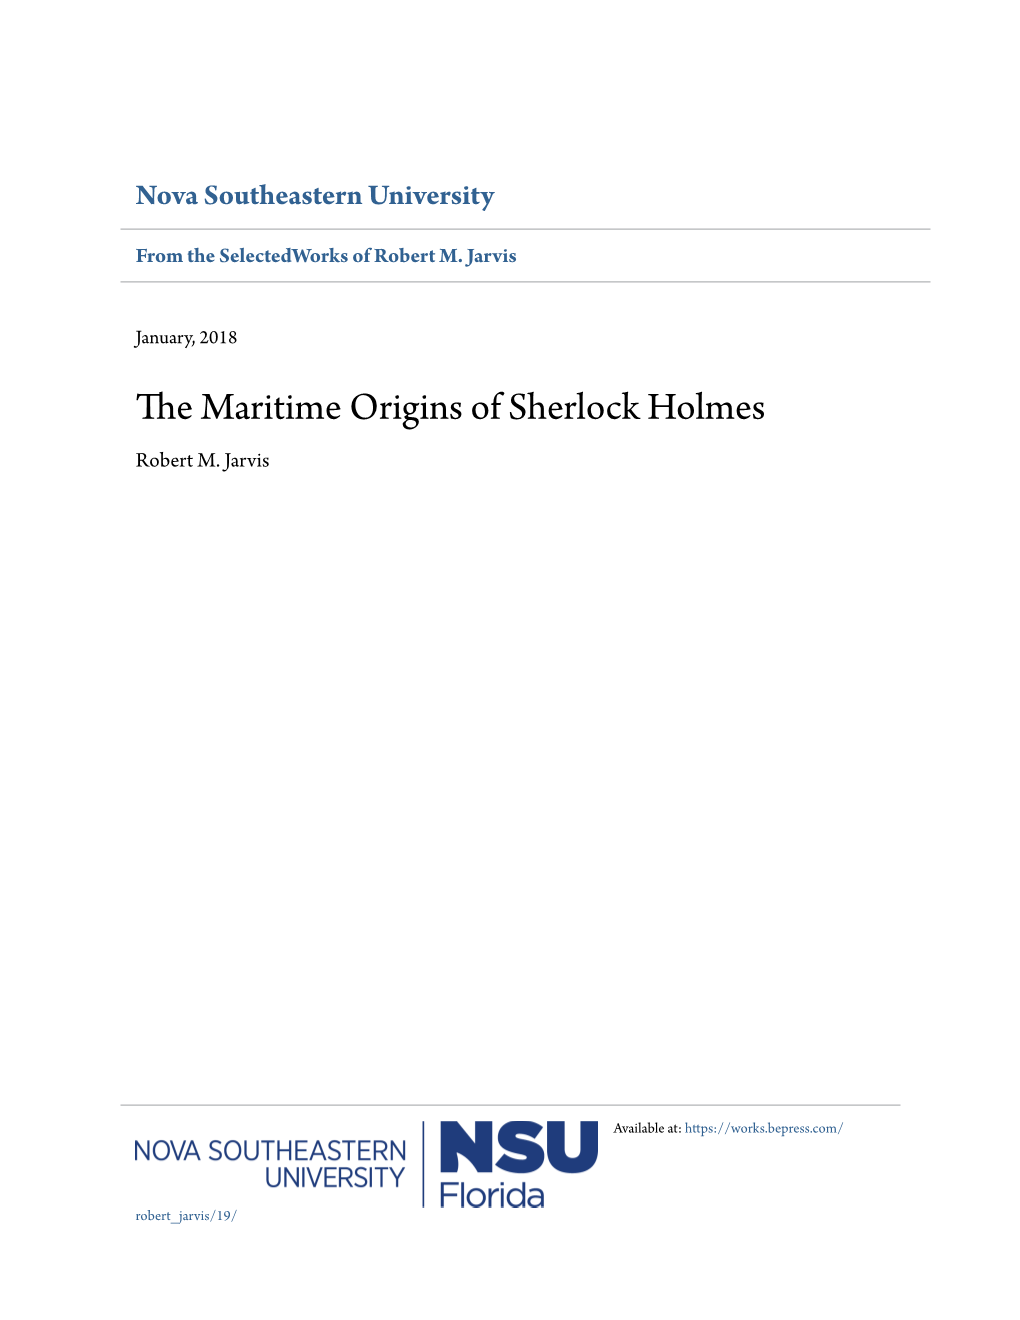 The Maritime Origins of Sherlock Holmes